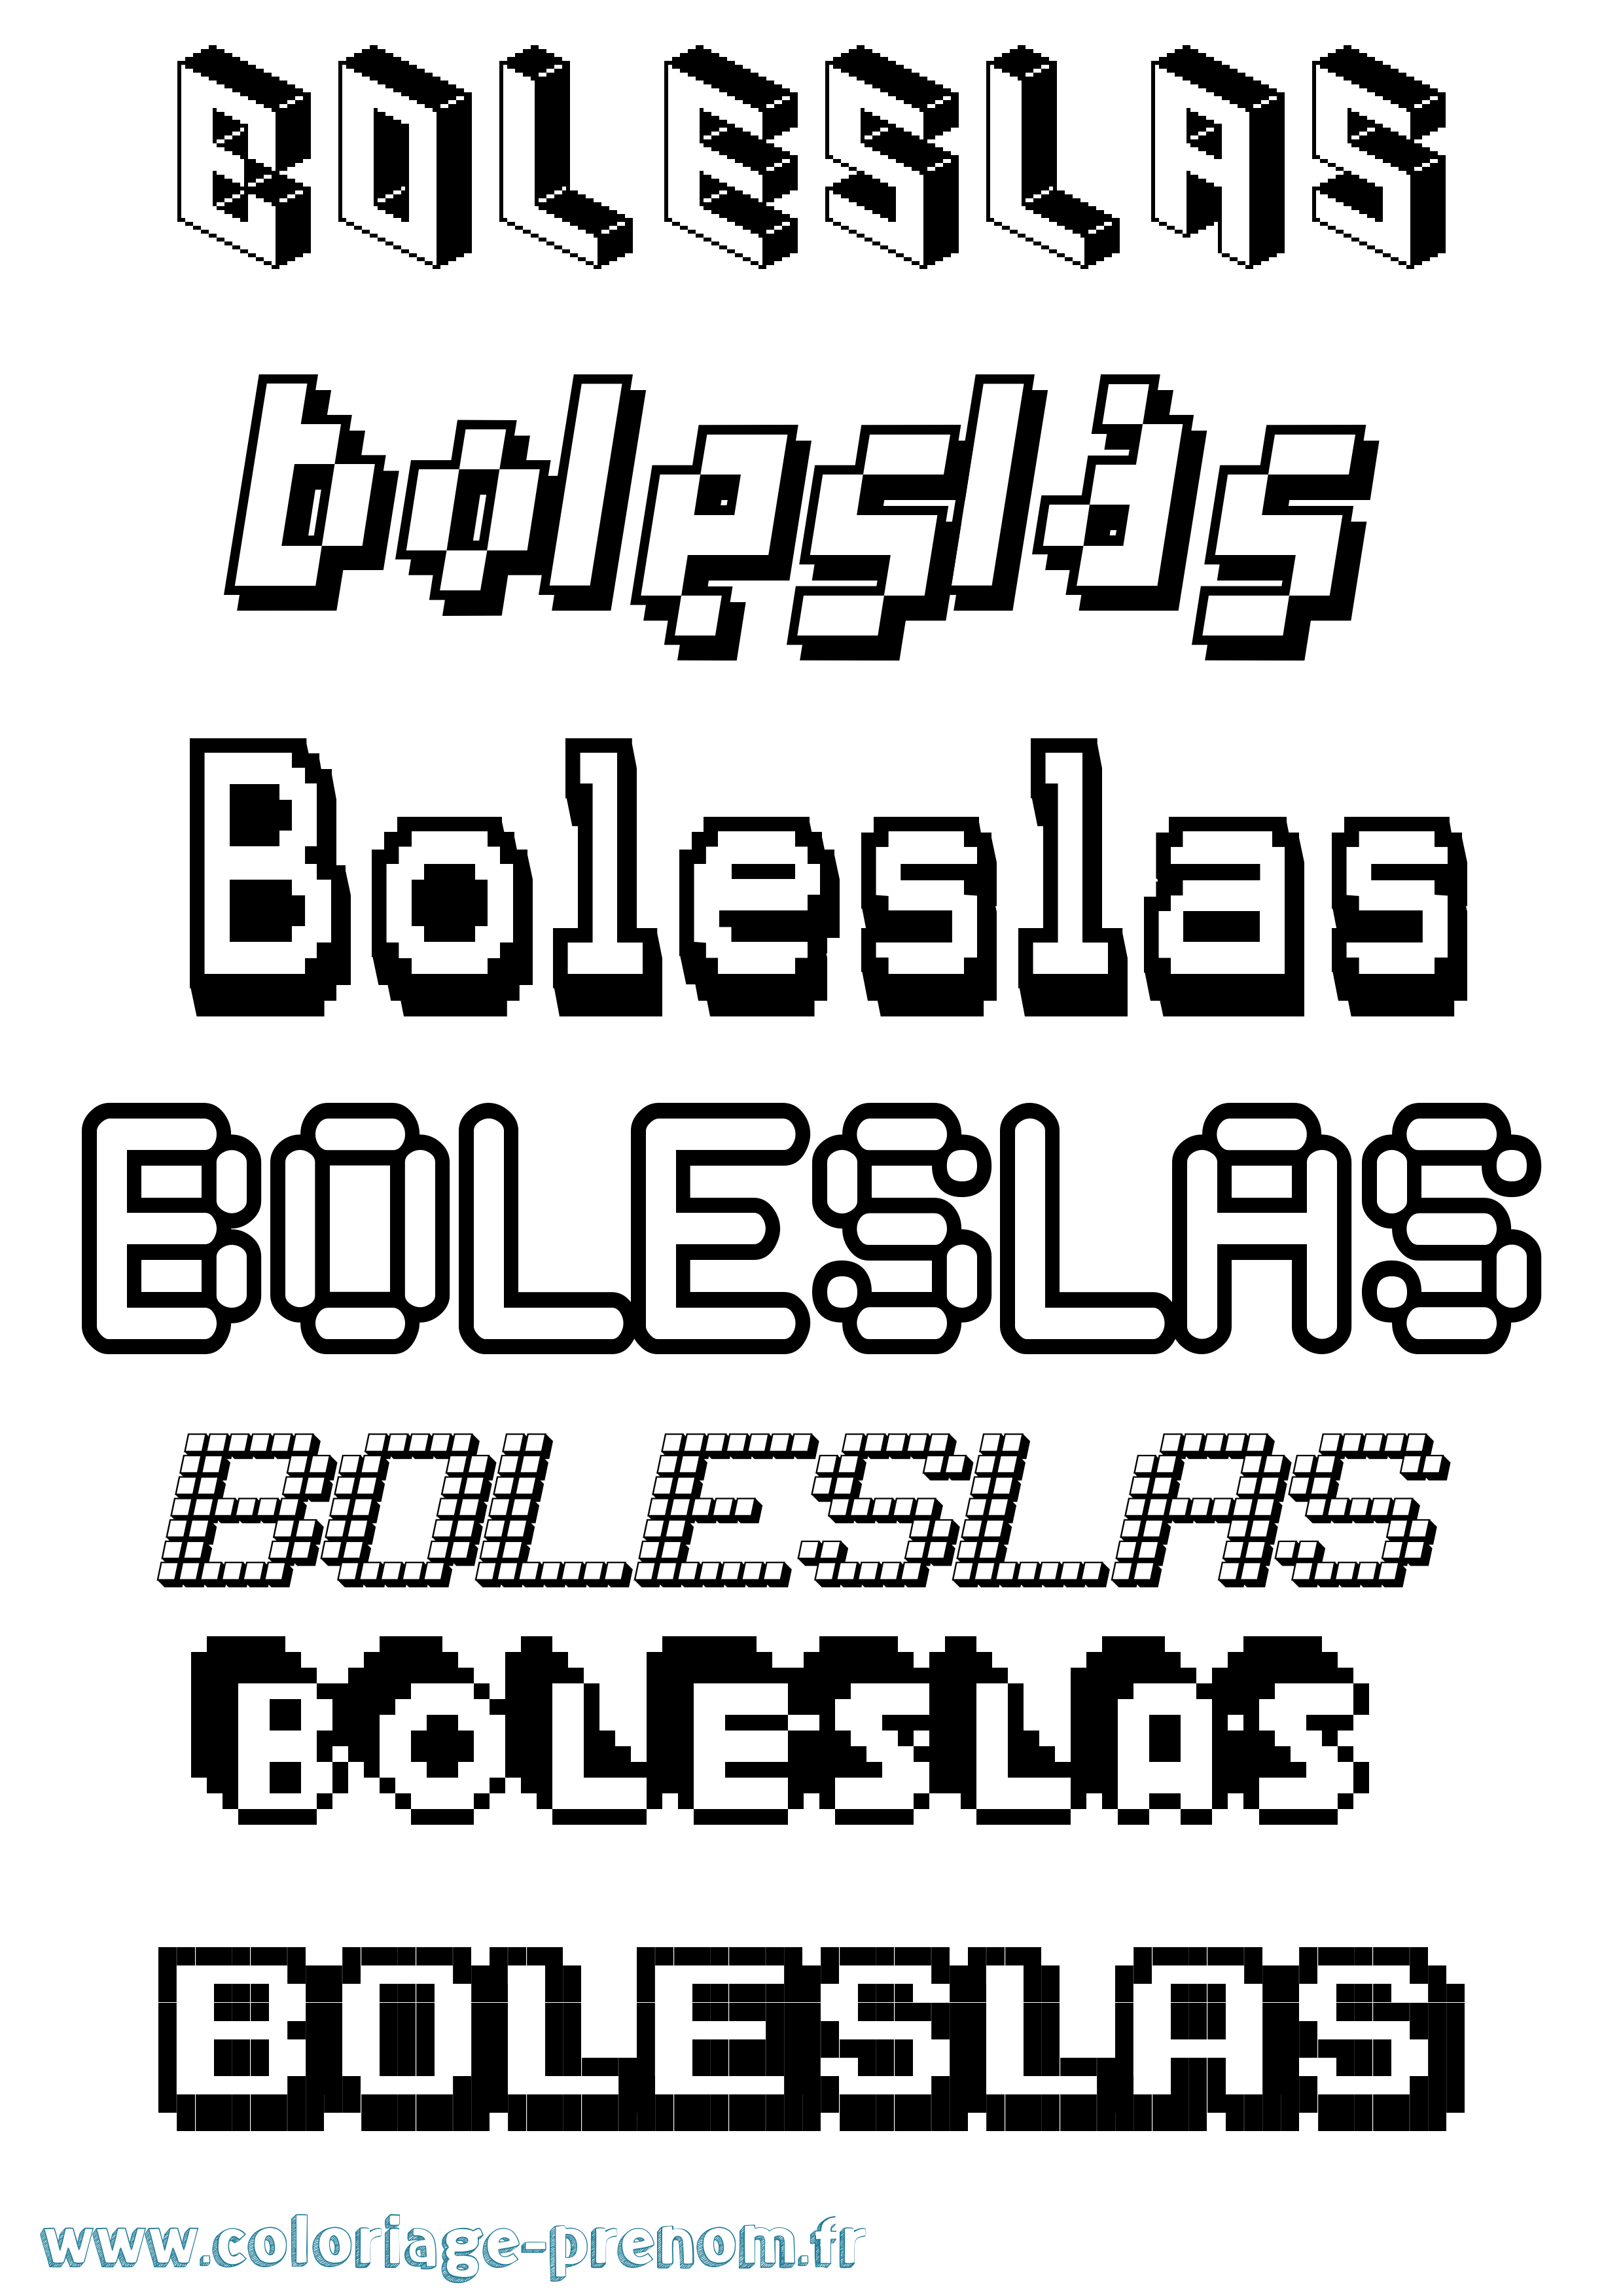 Coloriage prénom Boleslas Pixel